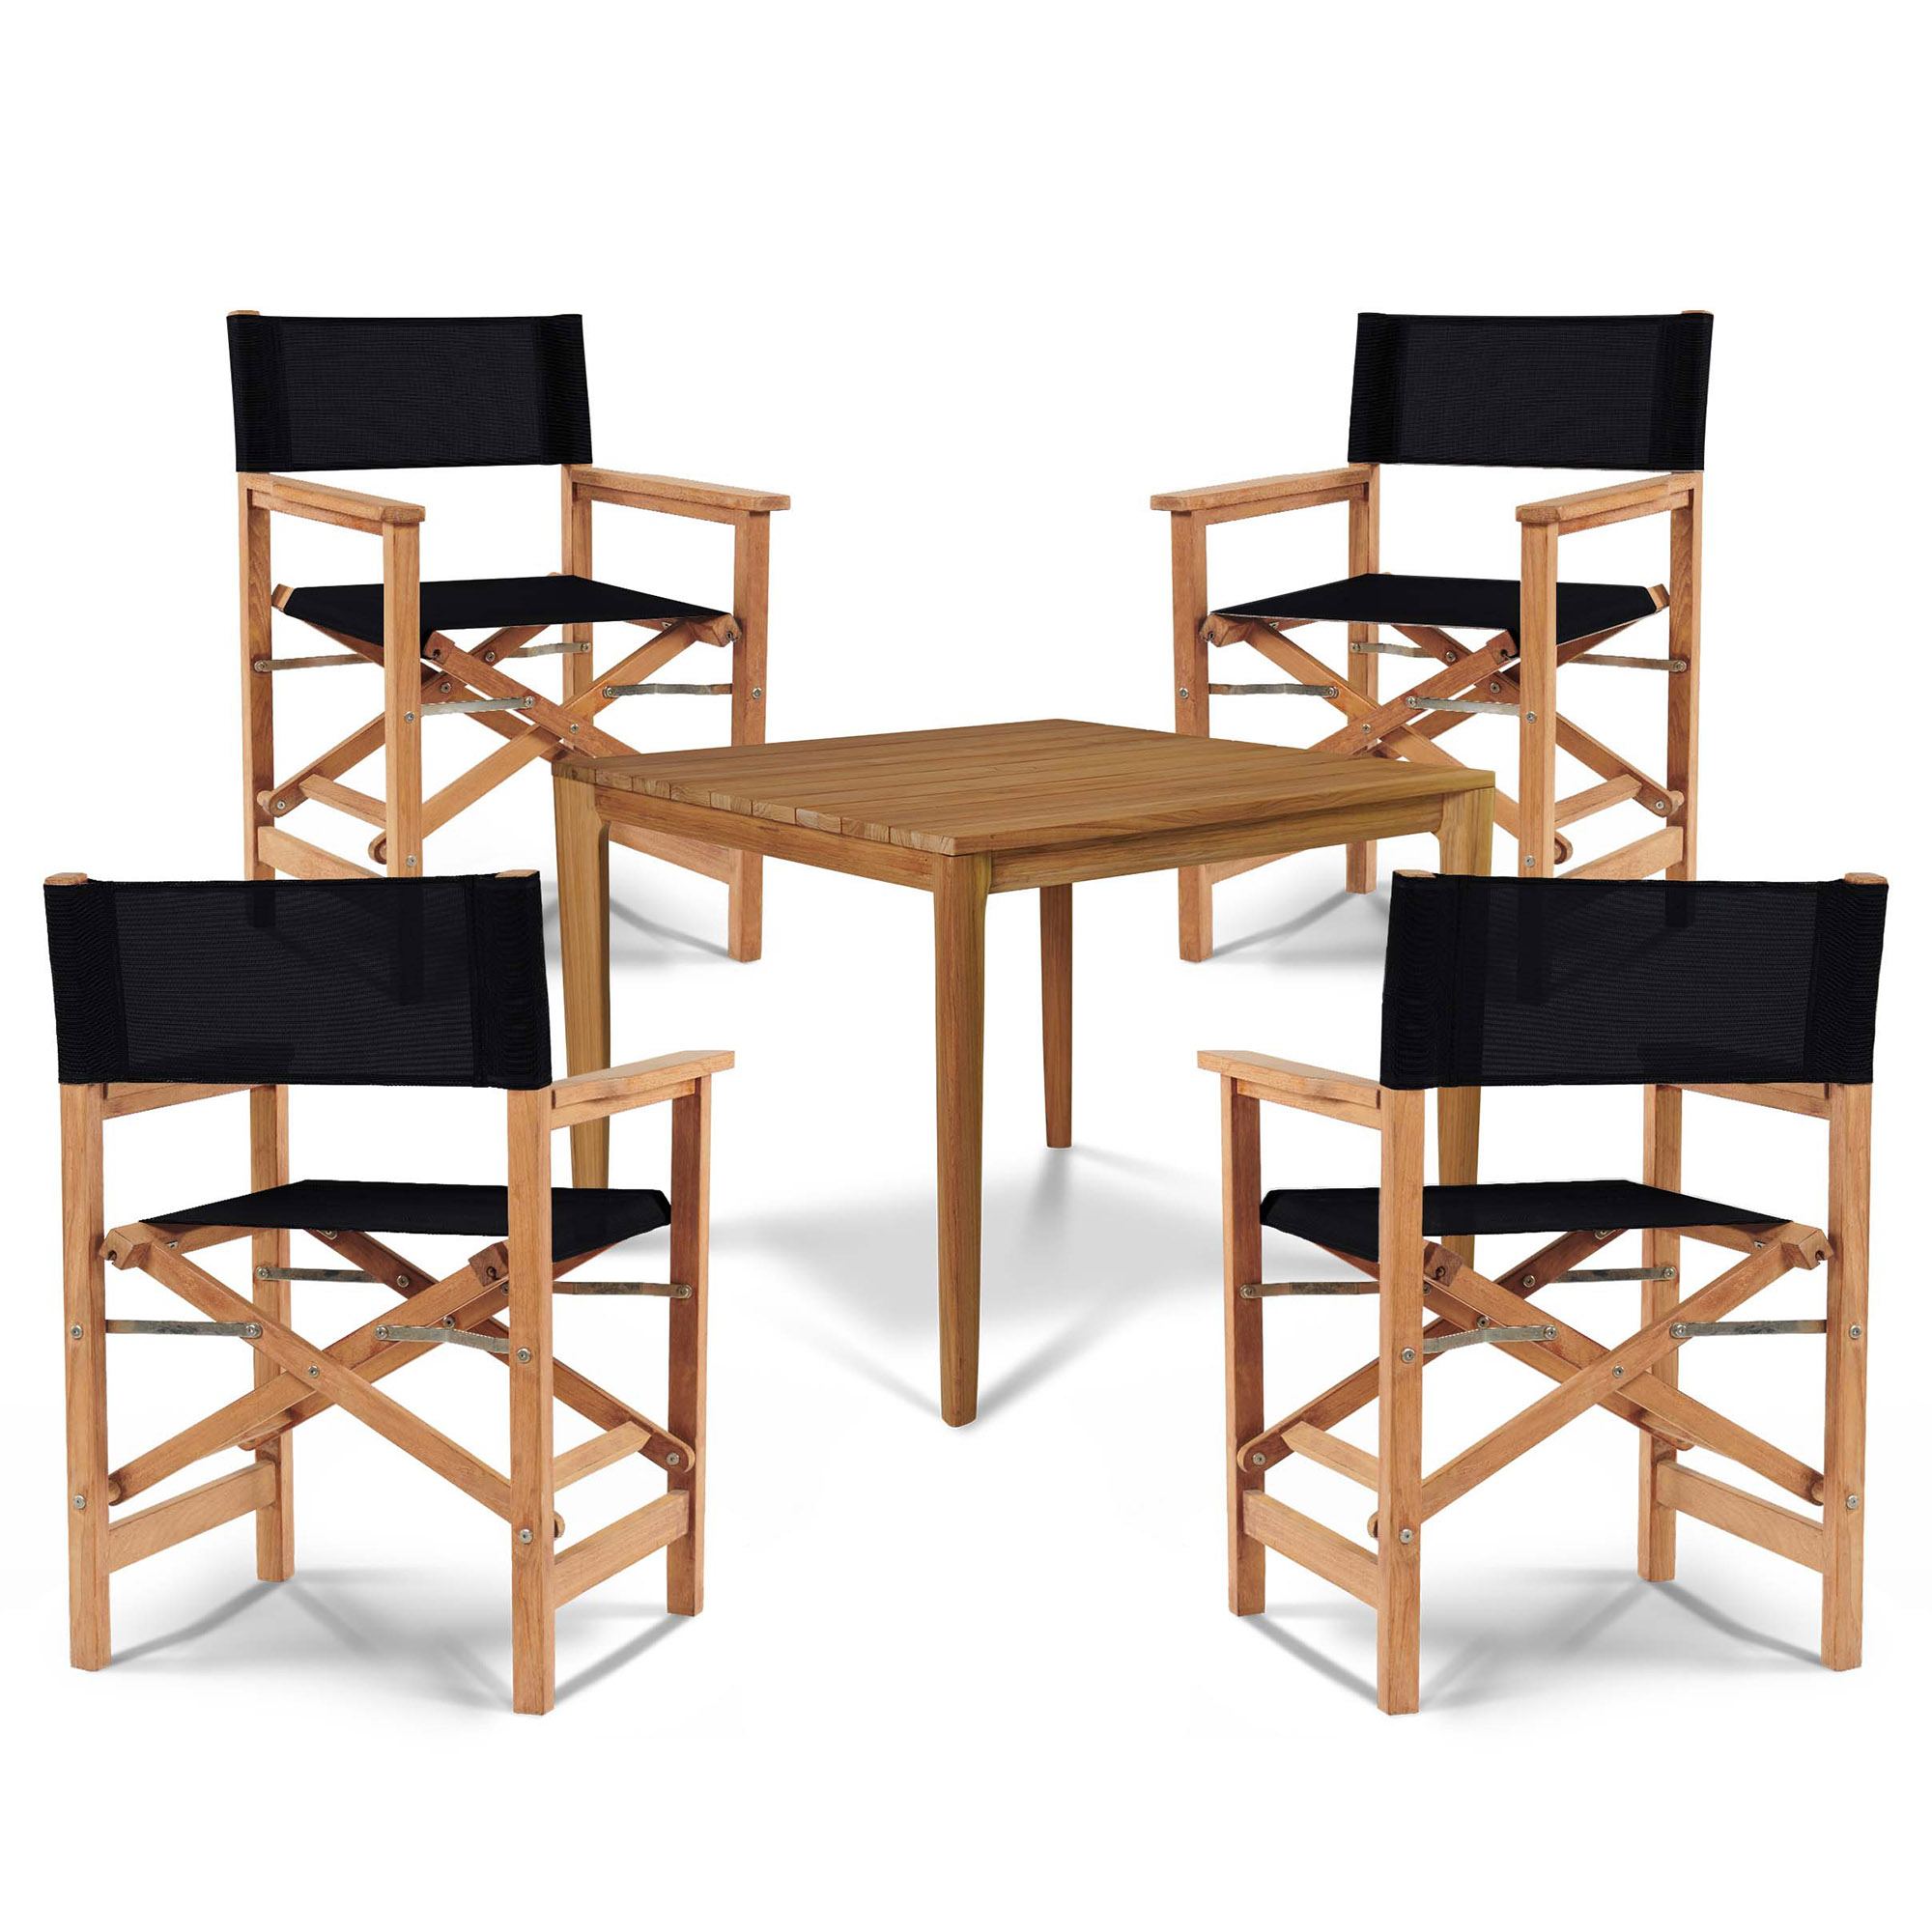 Del Ray 5-Piece Square Teak Outdoor Dining Set-Outdoor Dining Sets-HiTeak-Black-LOOMLAN